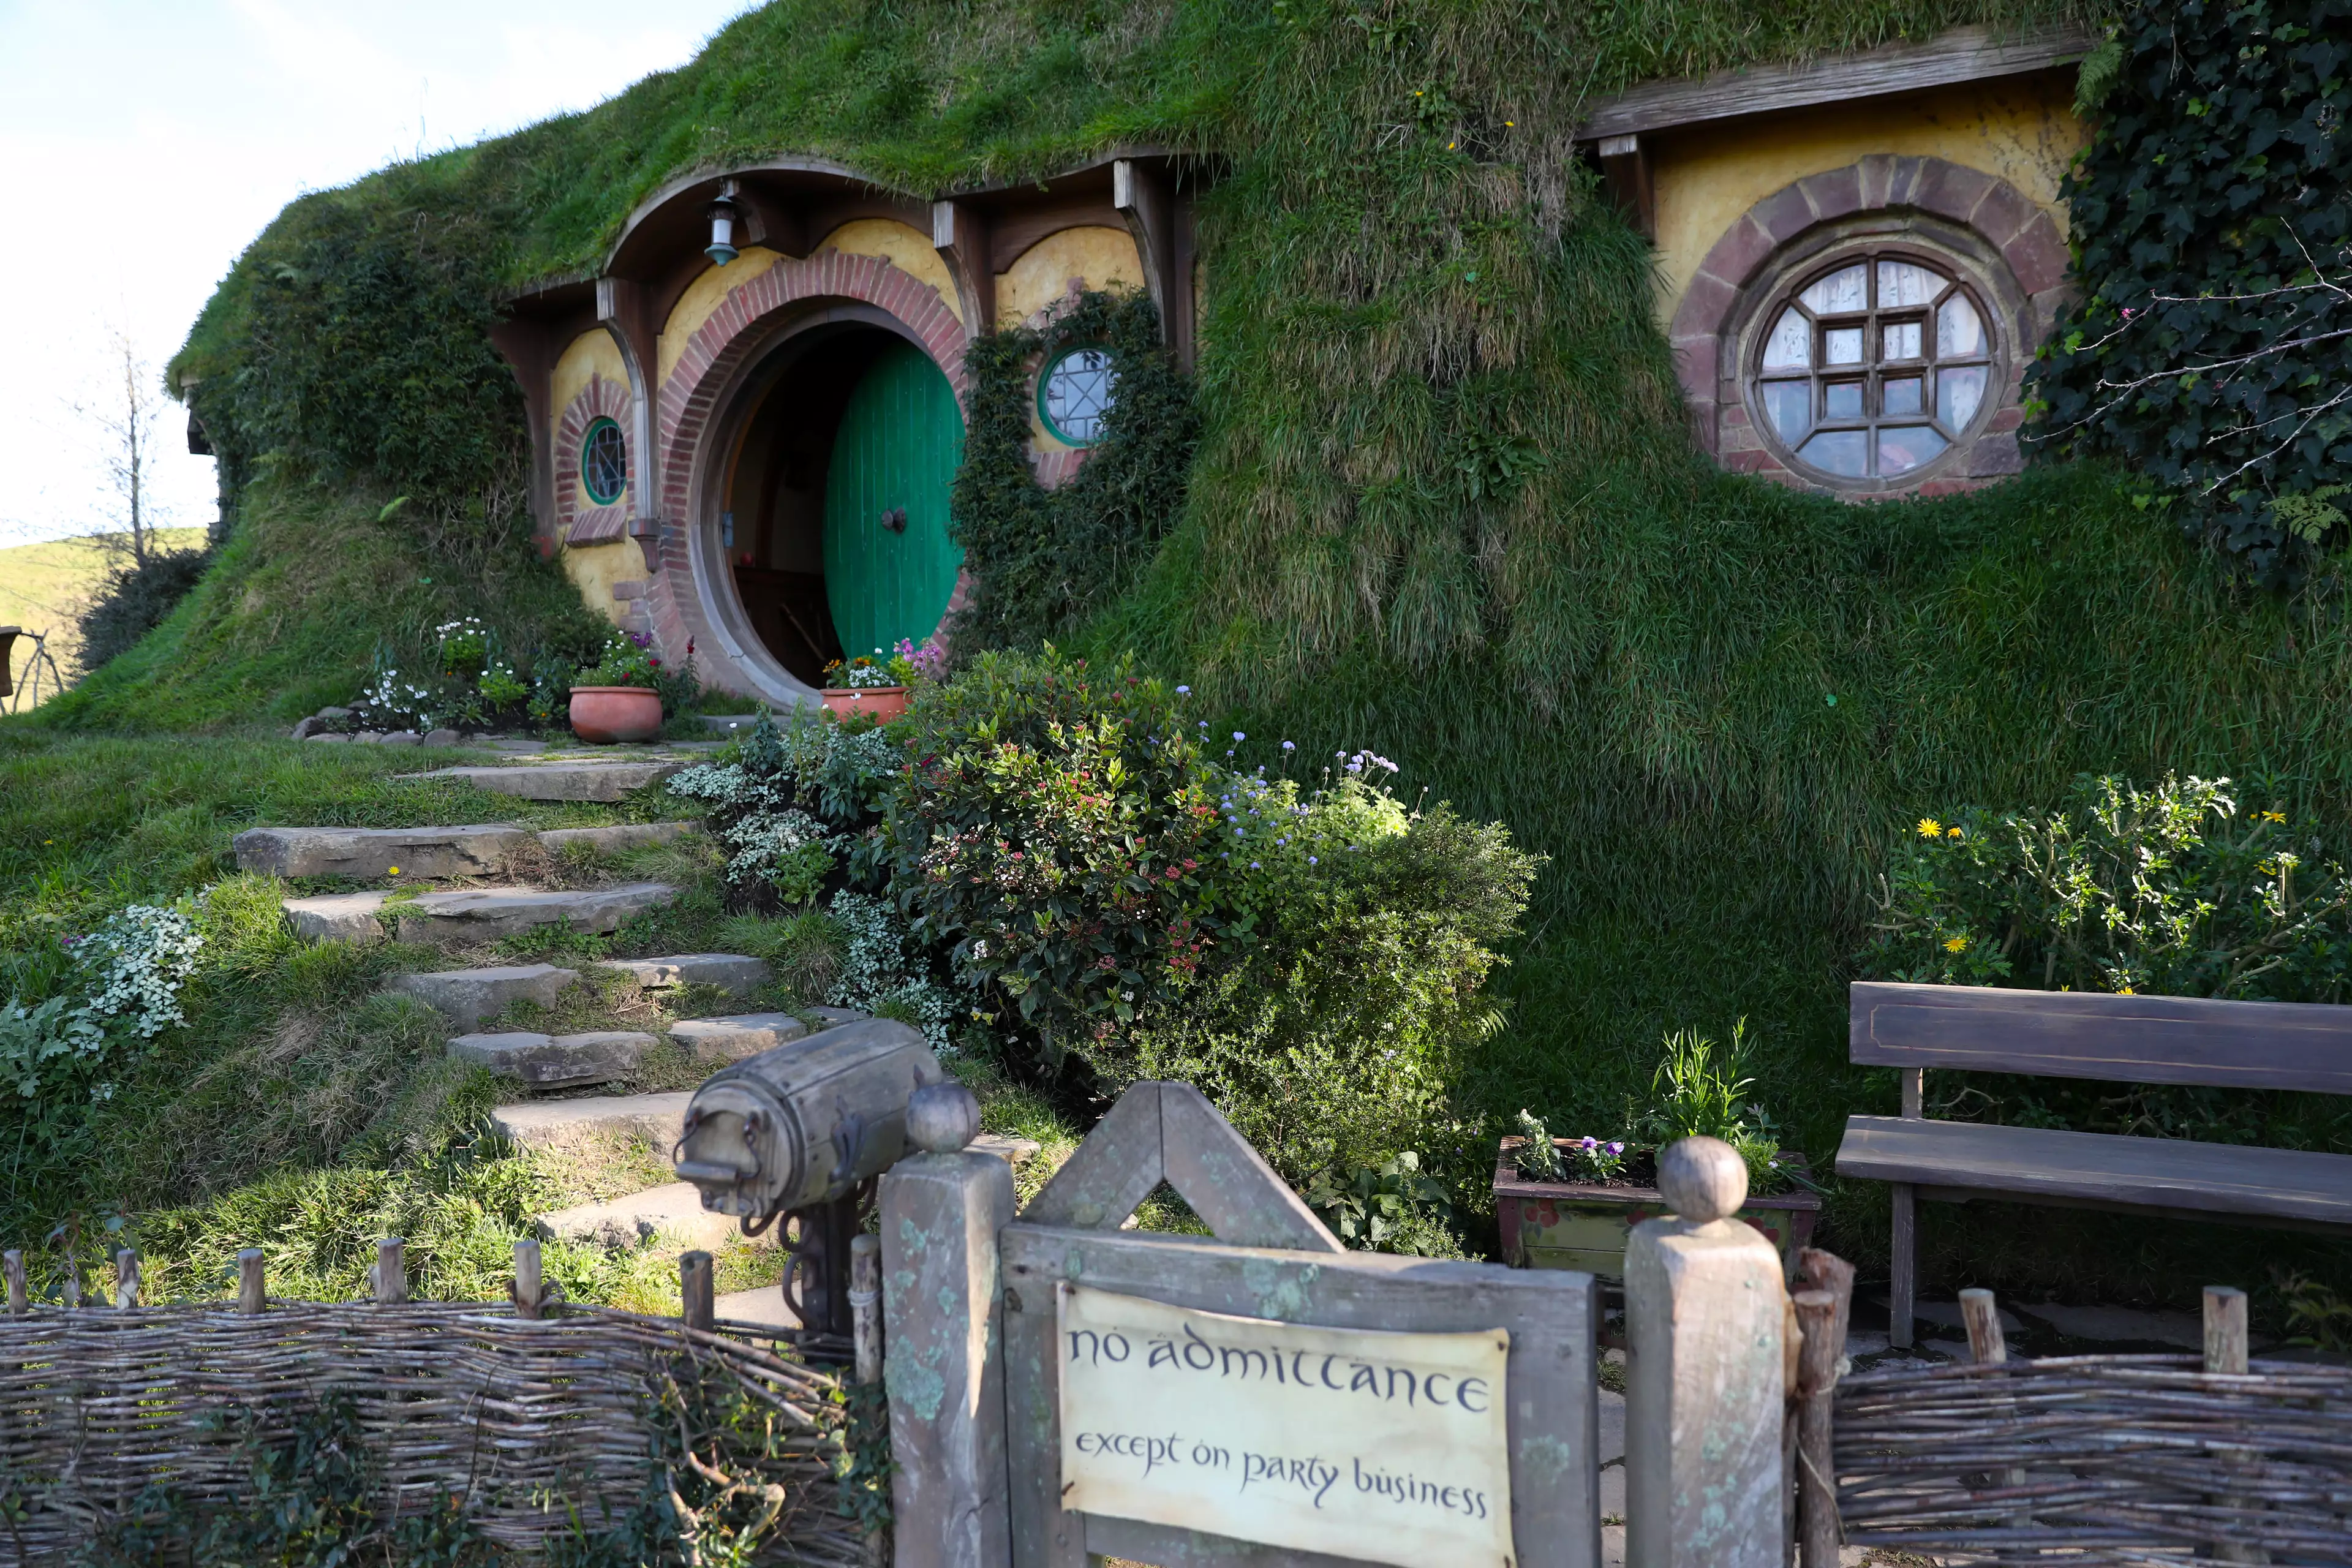 The Hobbiton set in New Zealand.